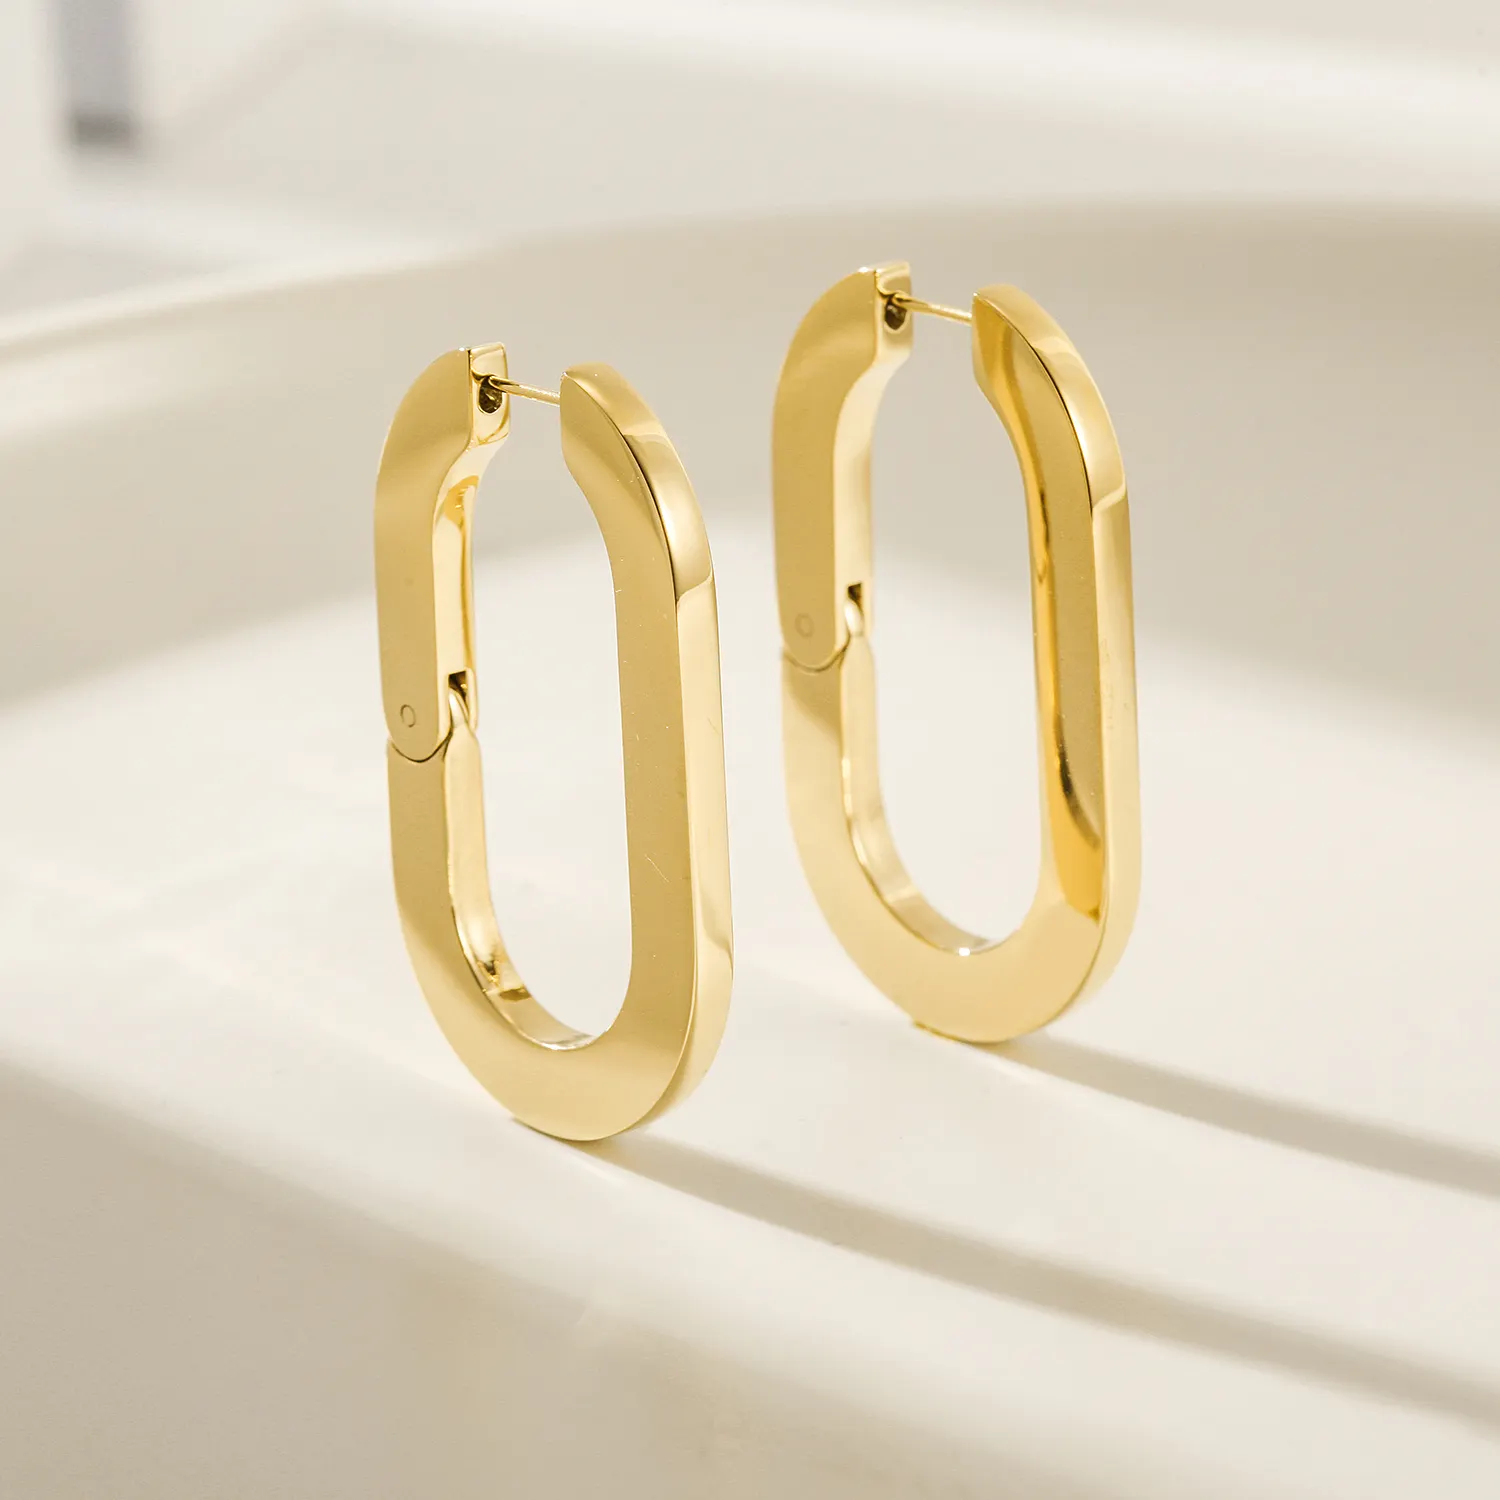 फैशन गहने 18k सोने की प्लेटेड ज्यामितीय अंडाकार सर्कल हूप इयररिंग्स यू आकार चक्र कान के आकार चक्र क्लिप